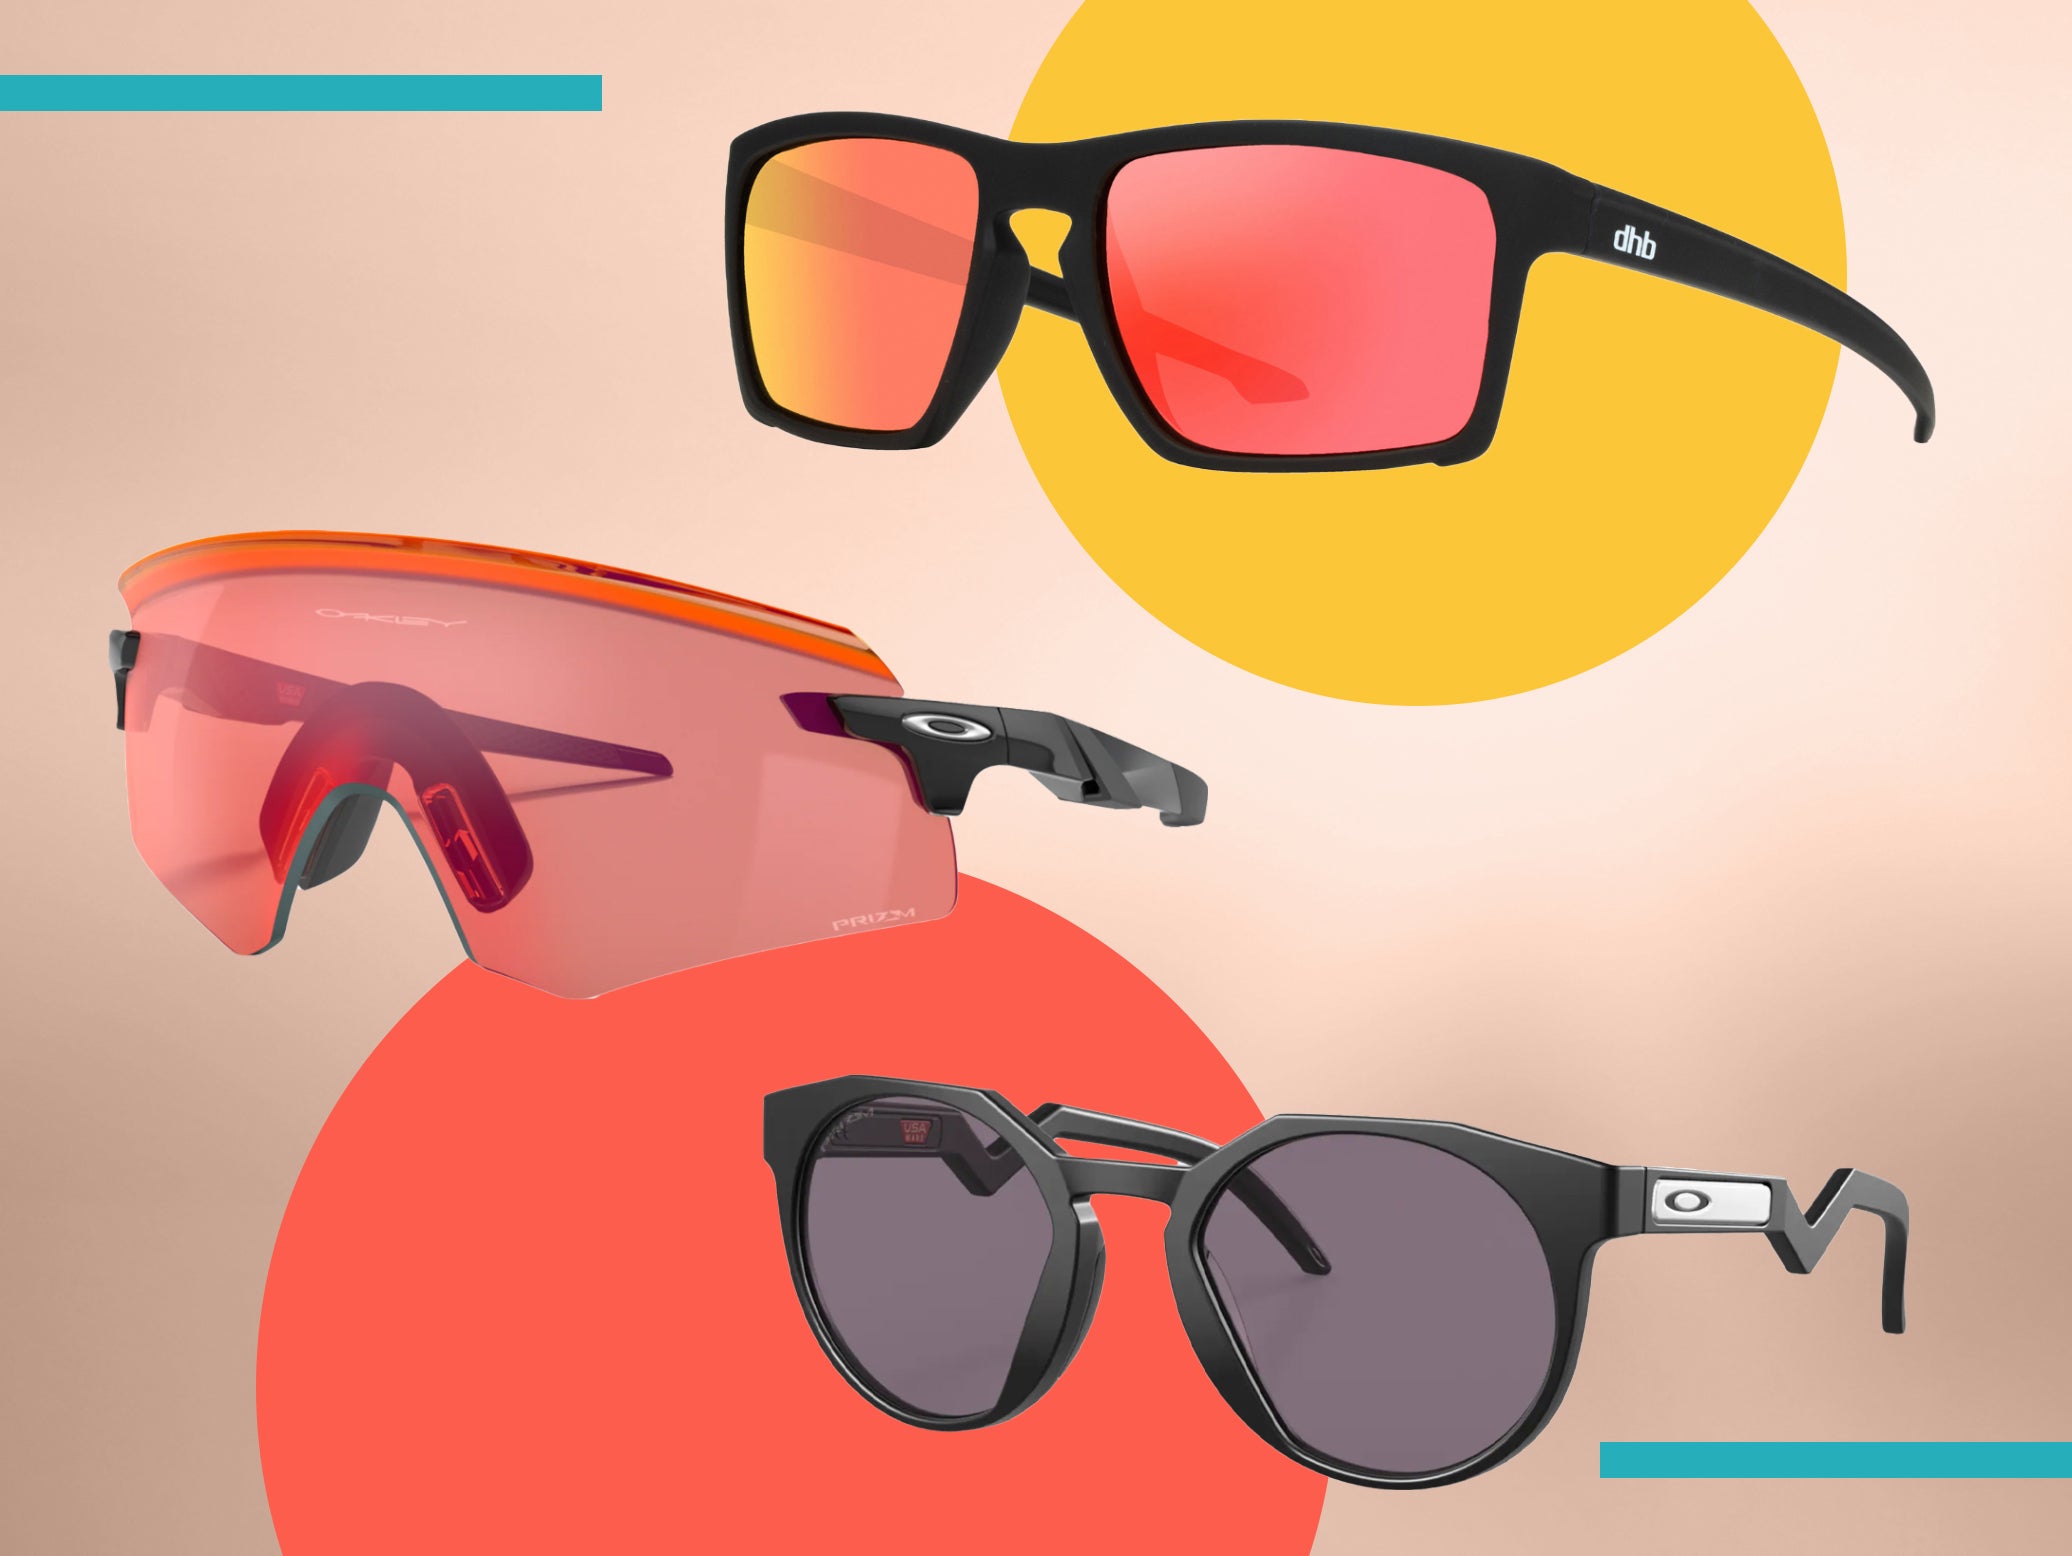 Kaenon Polarized Sunglasses